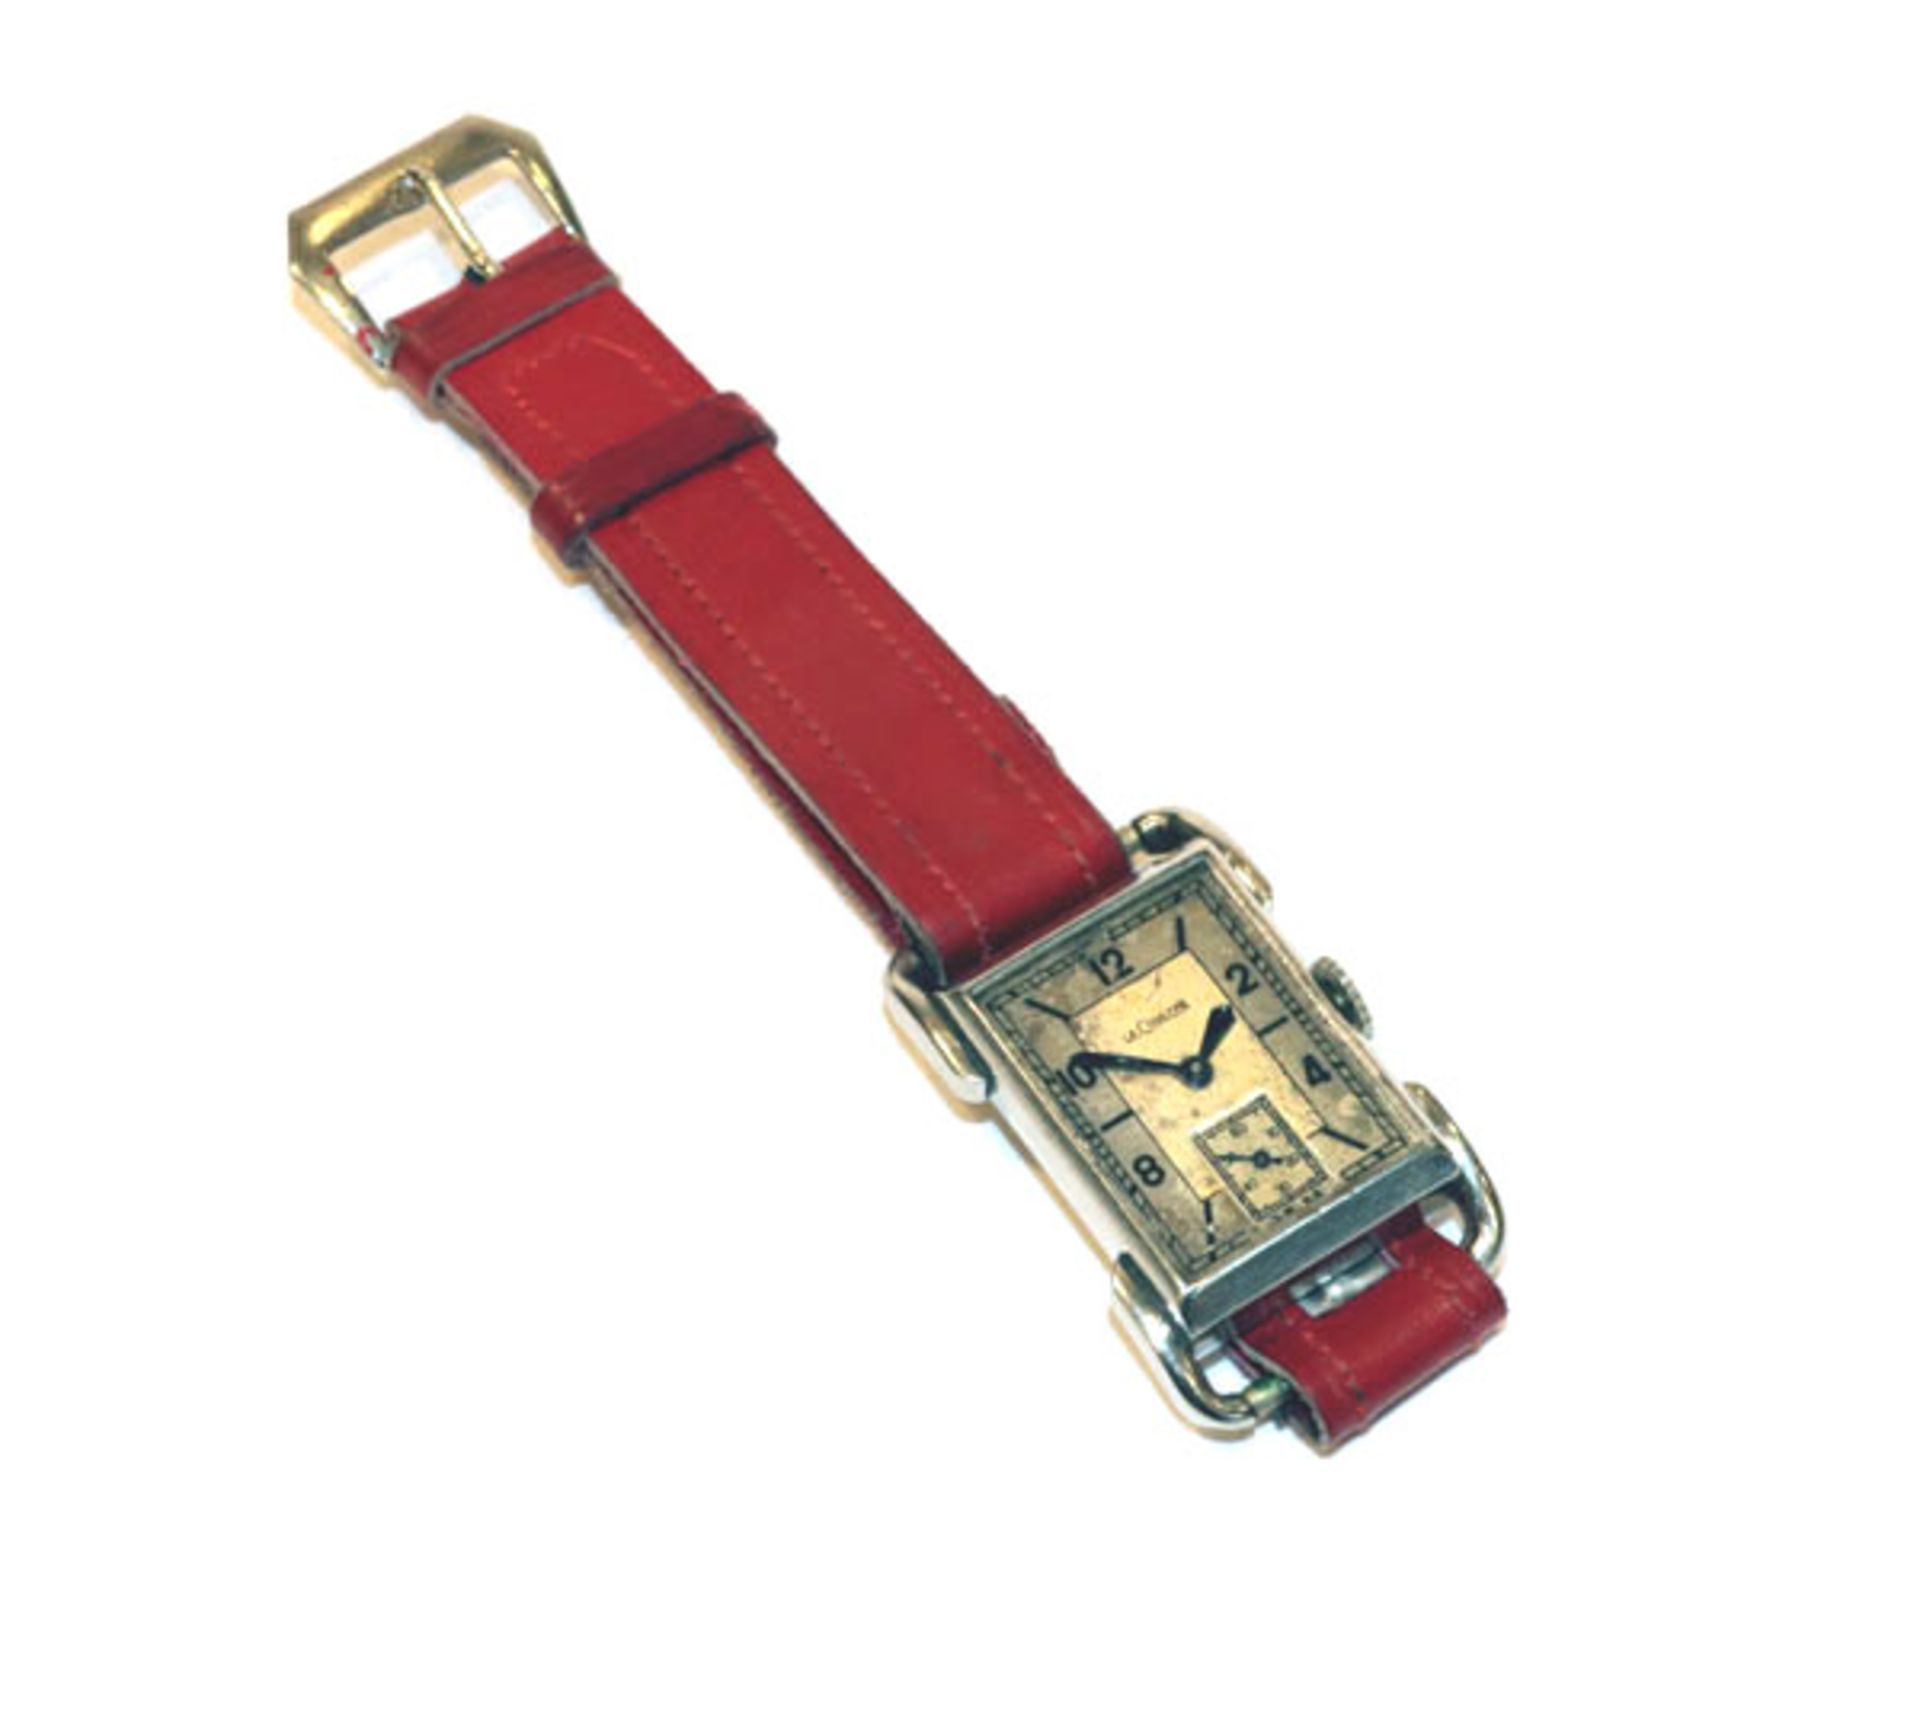 LeCoultre Damen Armbanduhr um 1930/40, Glas fehlt, Zifferblatt fleckig, defekt, an rotem Armband,